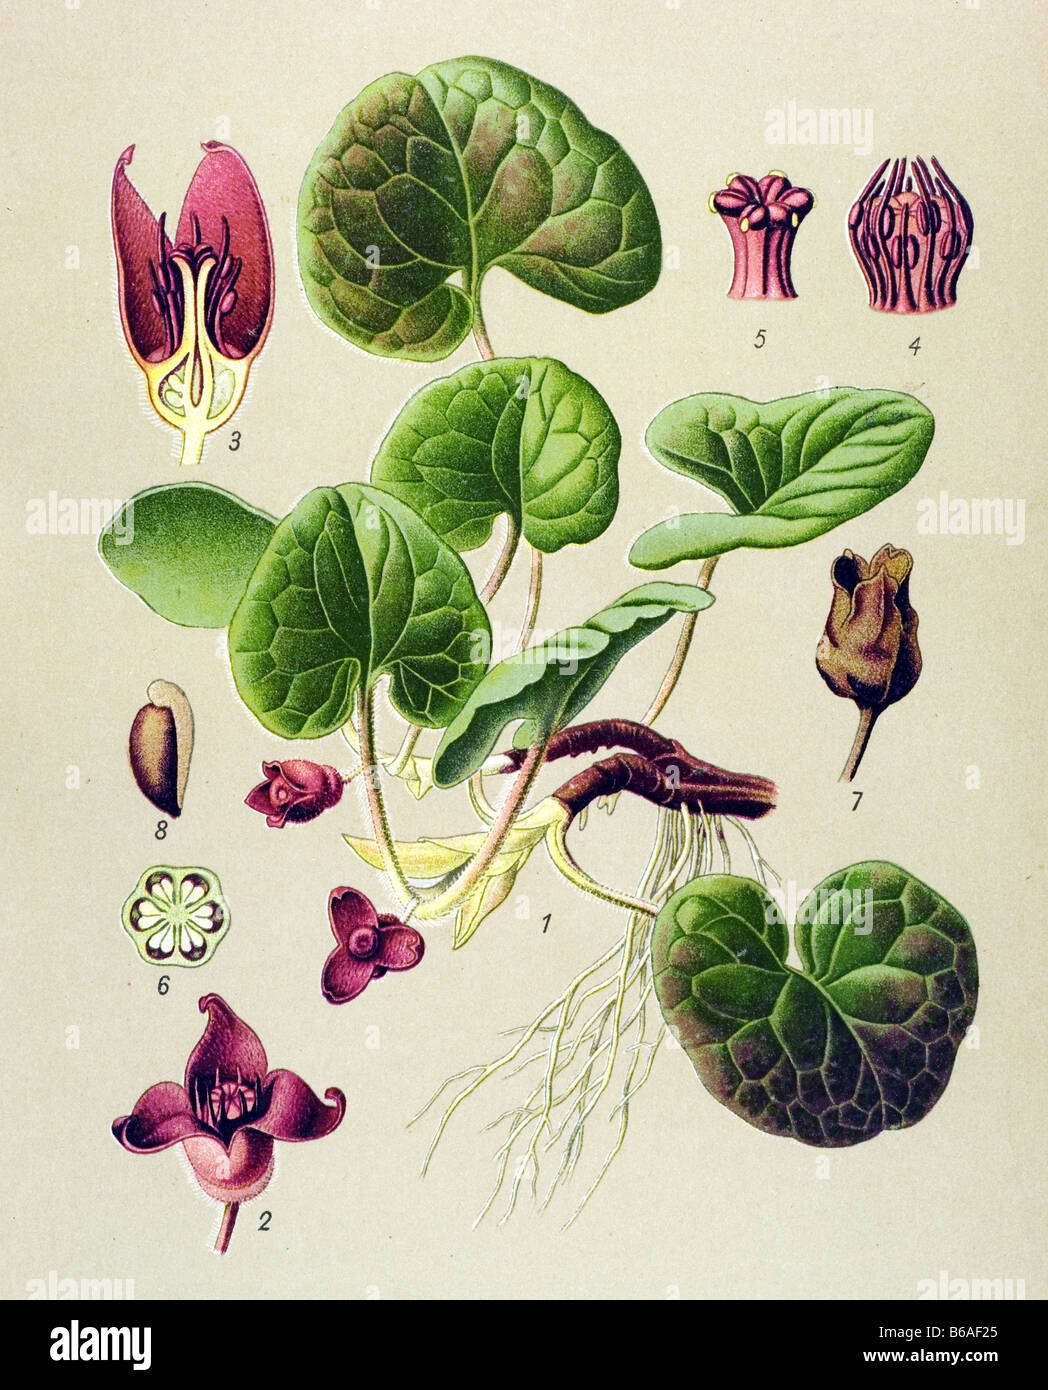 Asarabacca, Asarum europaeum poisonous plants illustrations Stock Photo